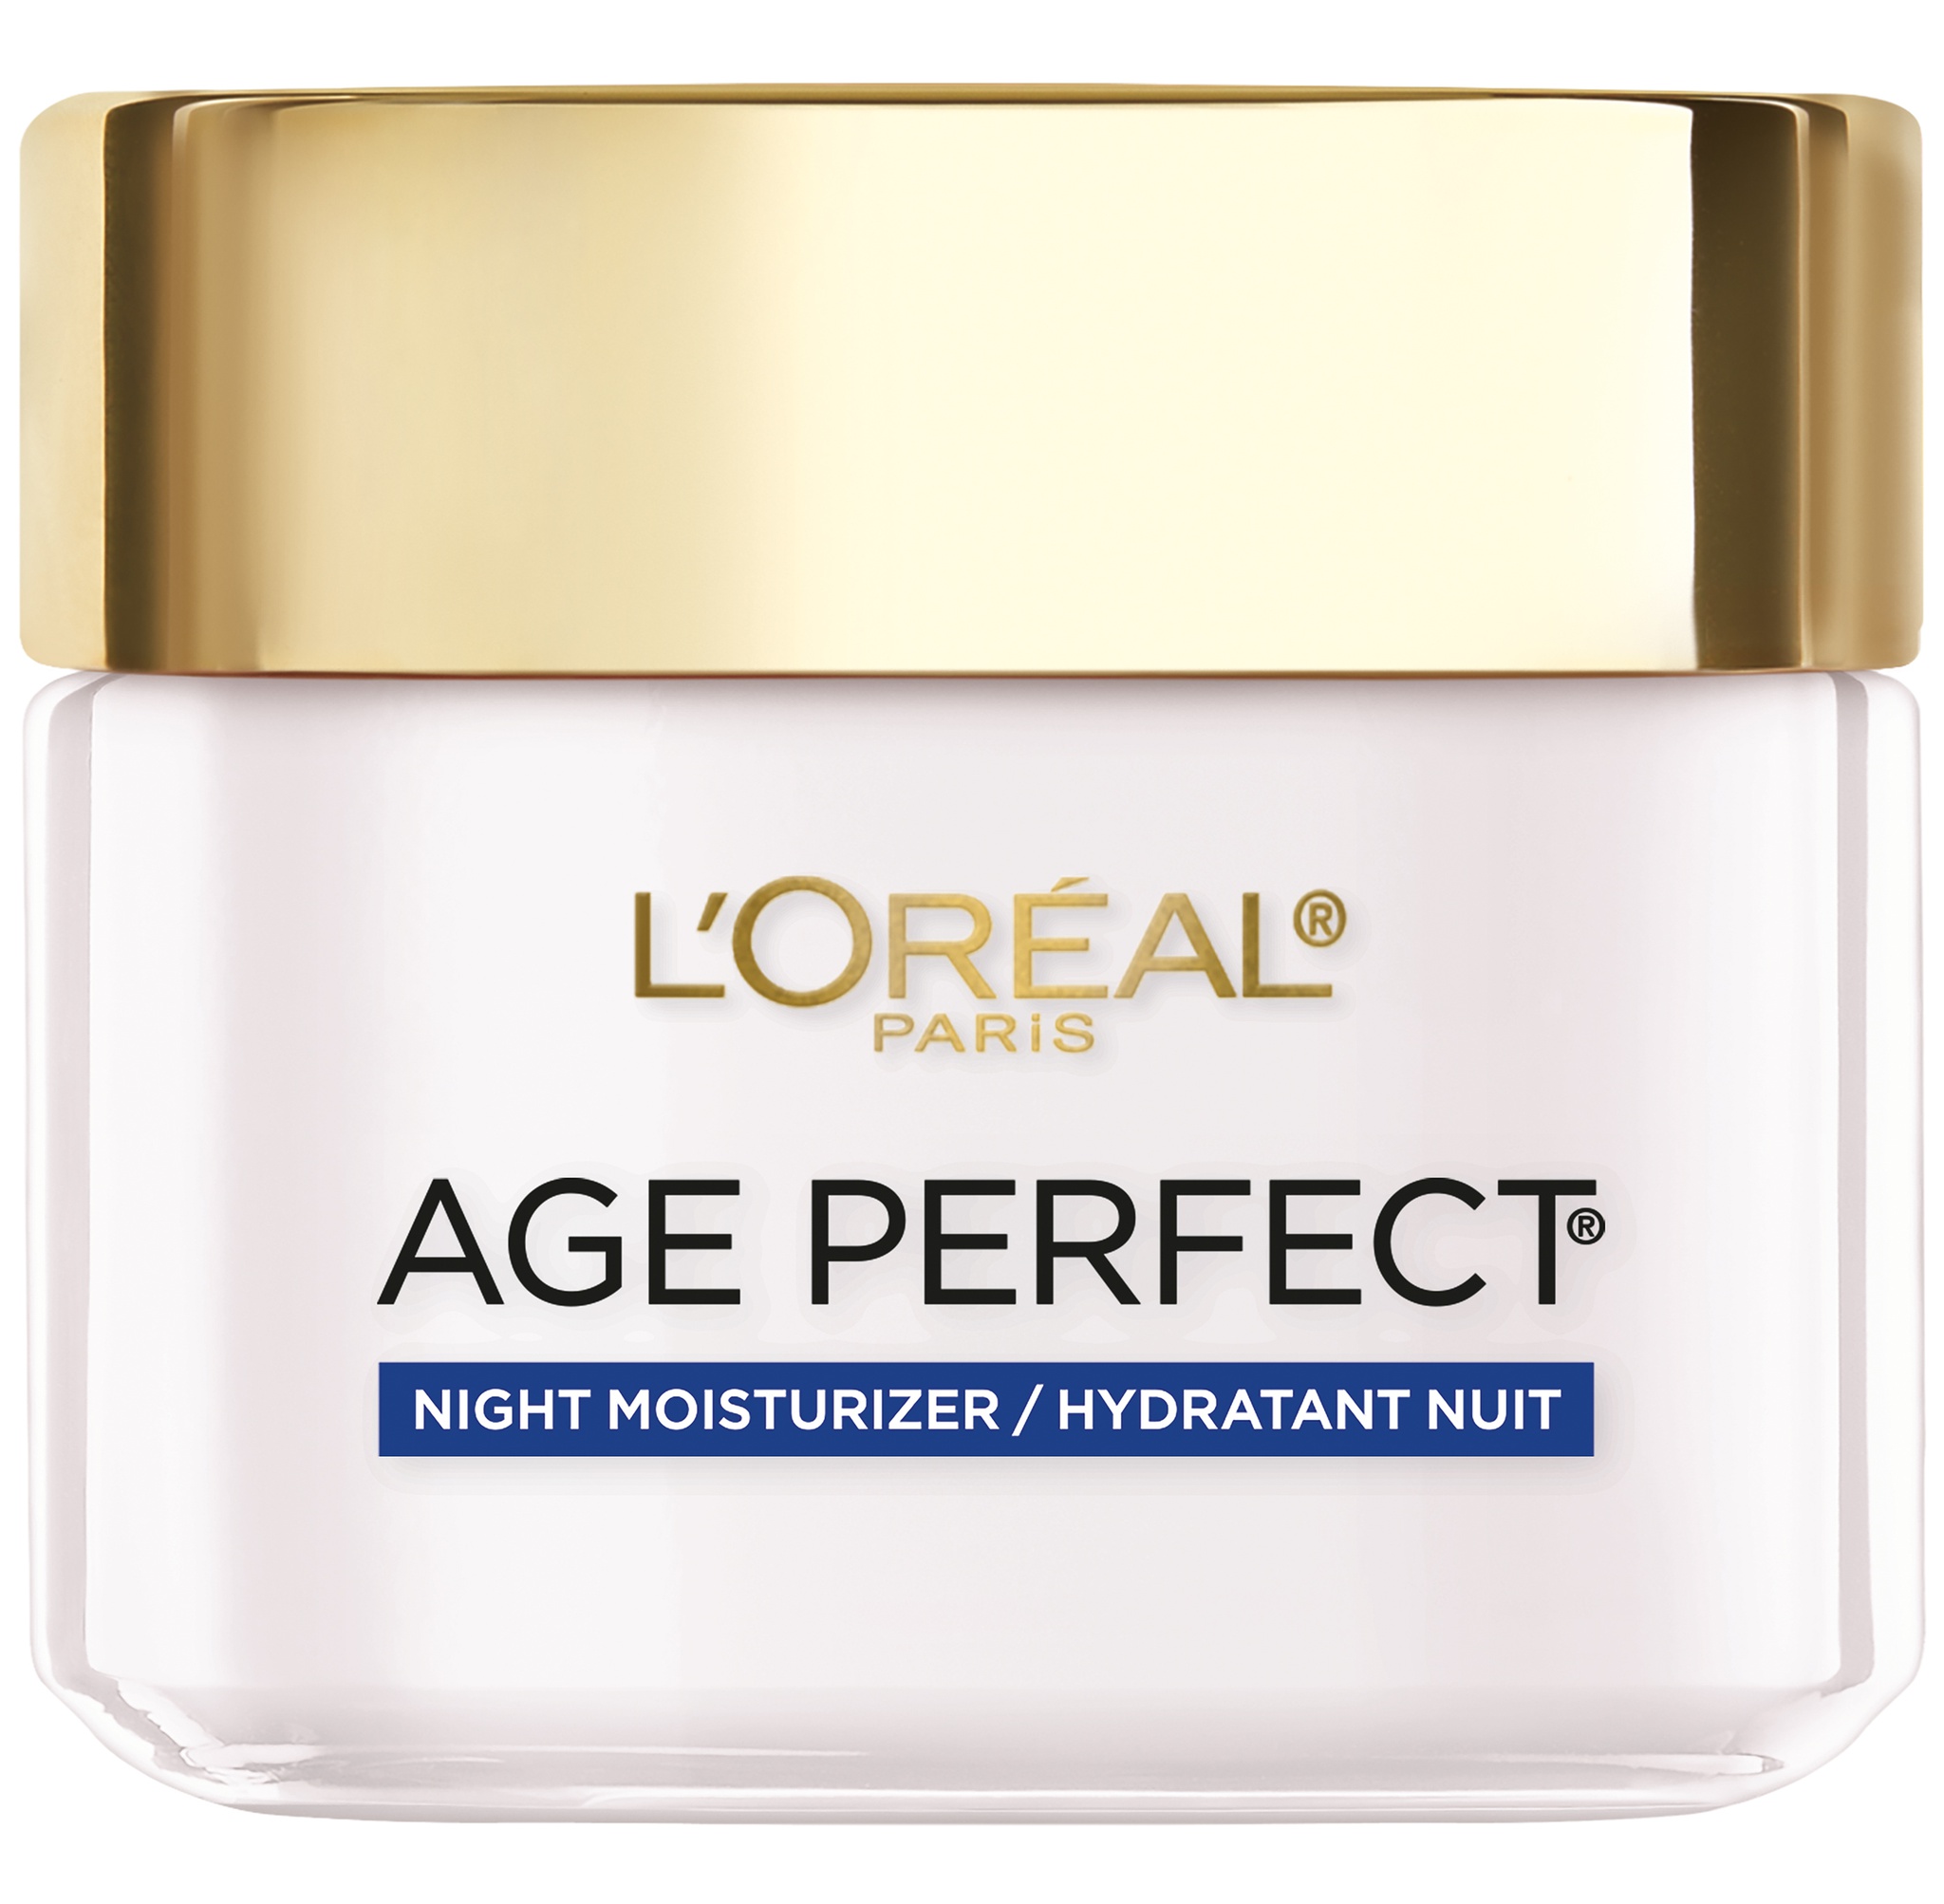 L'Oreal Age Perfect Night Moisturizer